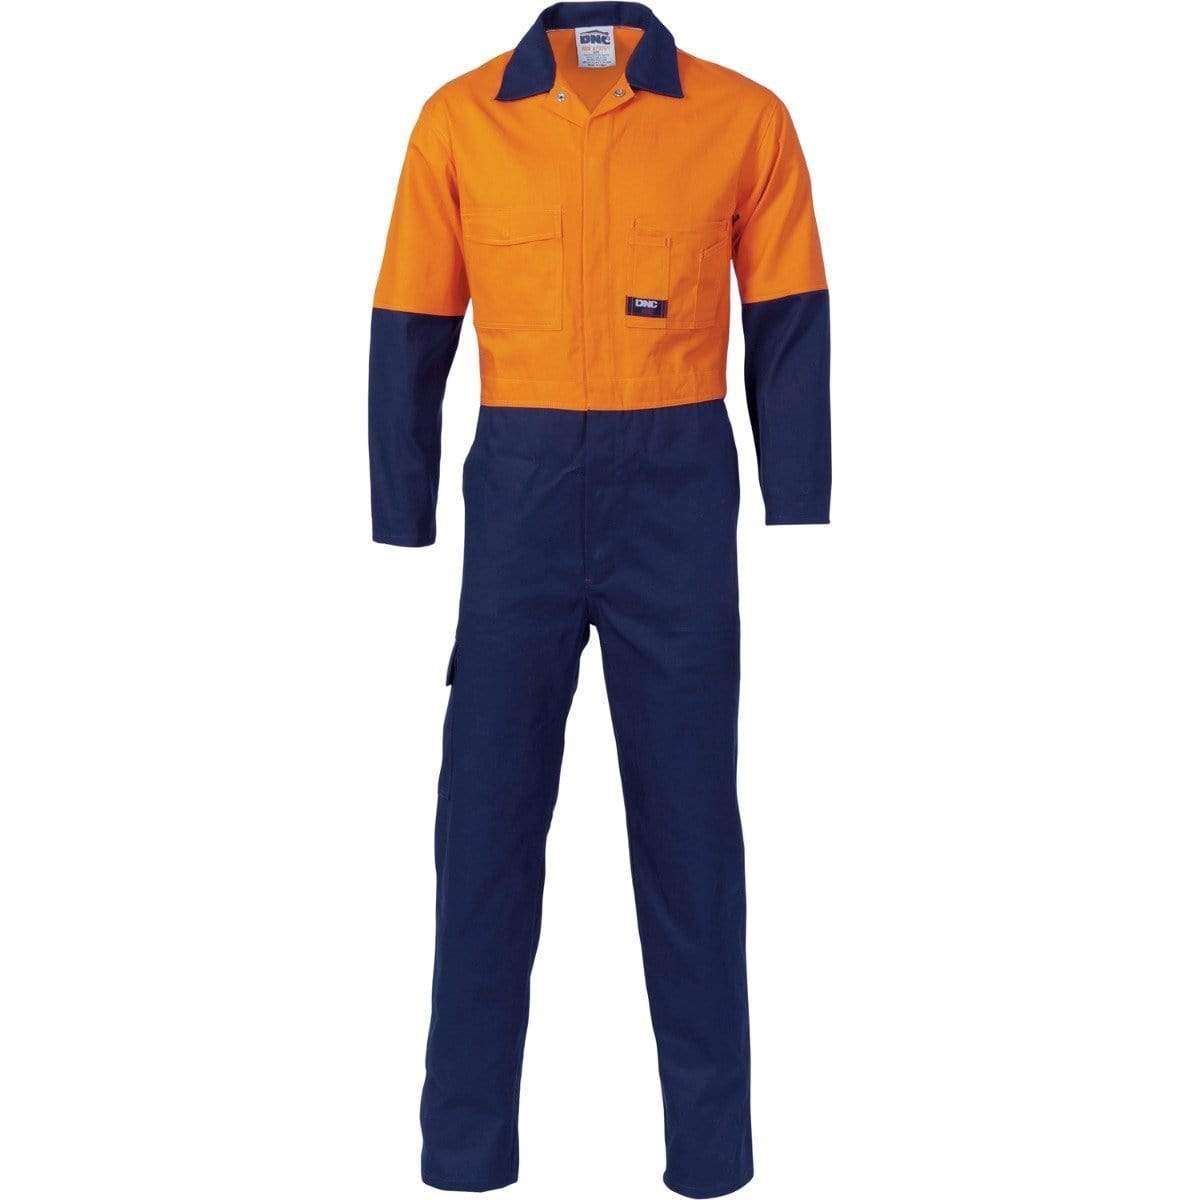 Dnc Workwear Hi-vis Two-tone Cotton Coverall - 3851 Work Wear DNC Workwear Orange/Navy 77R 